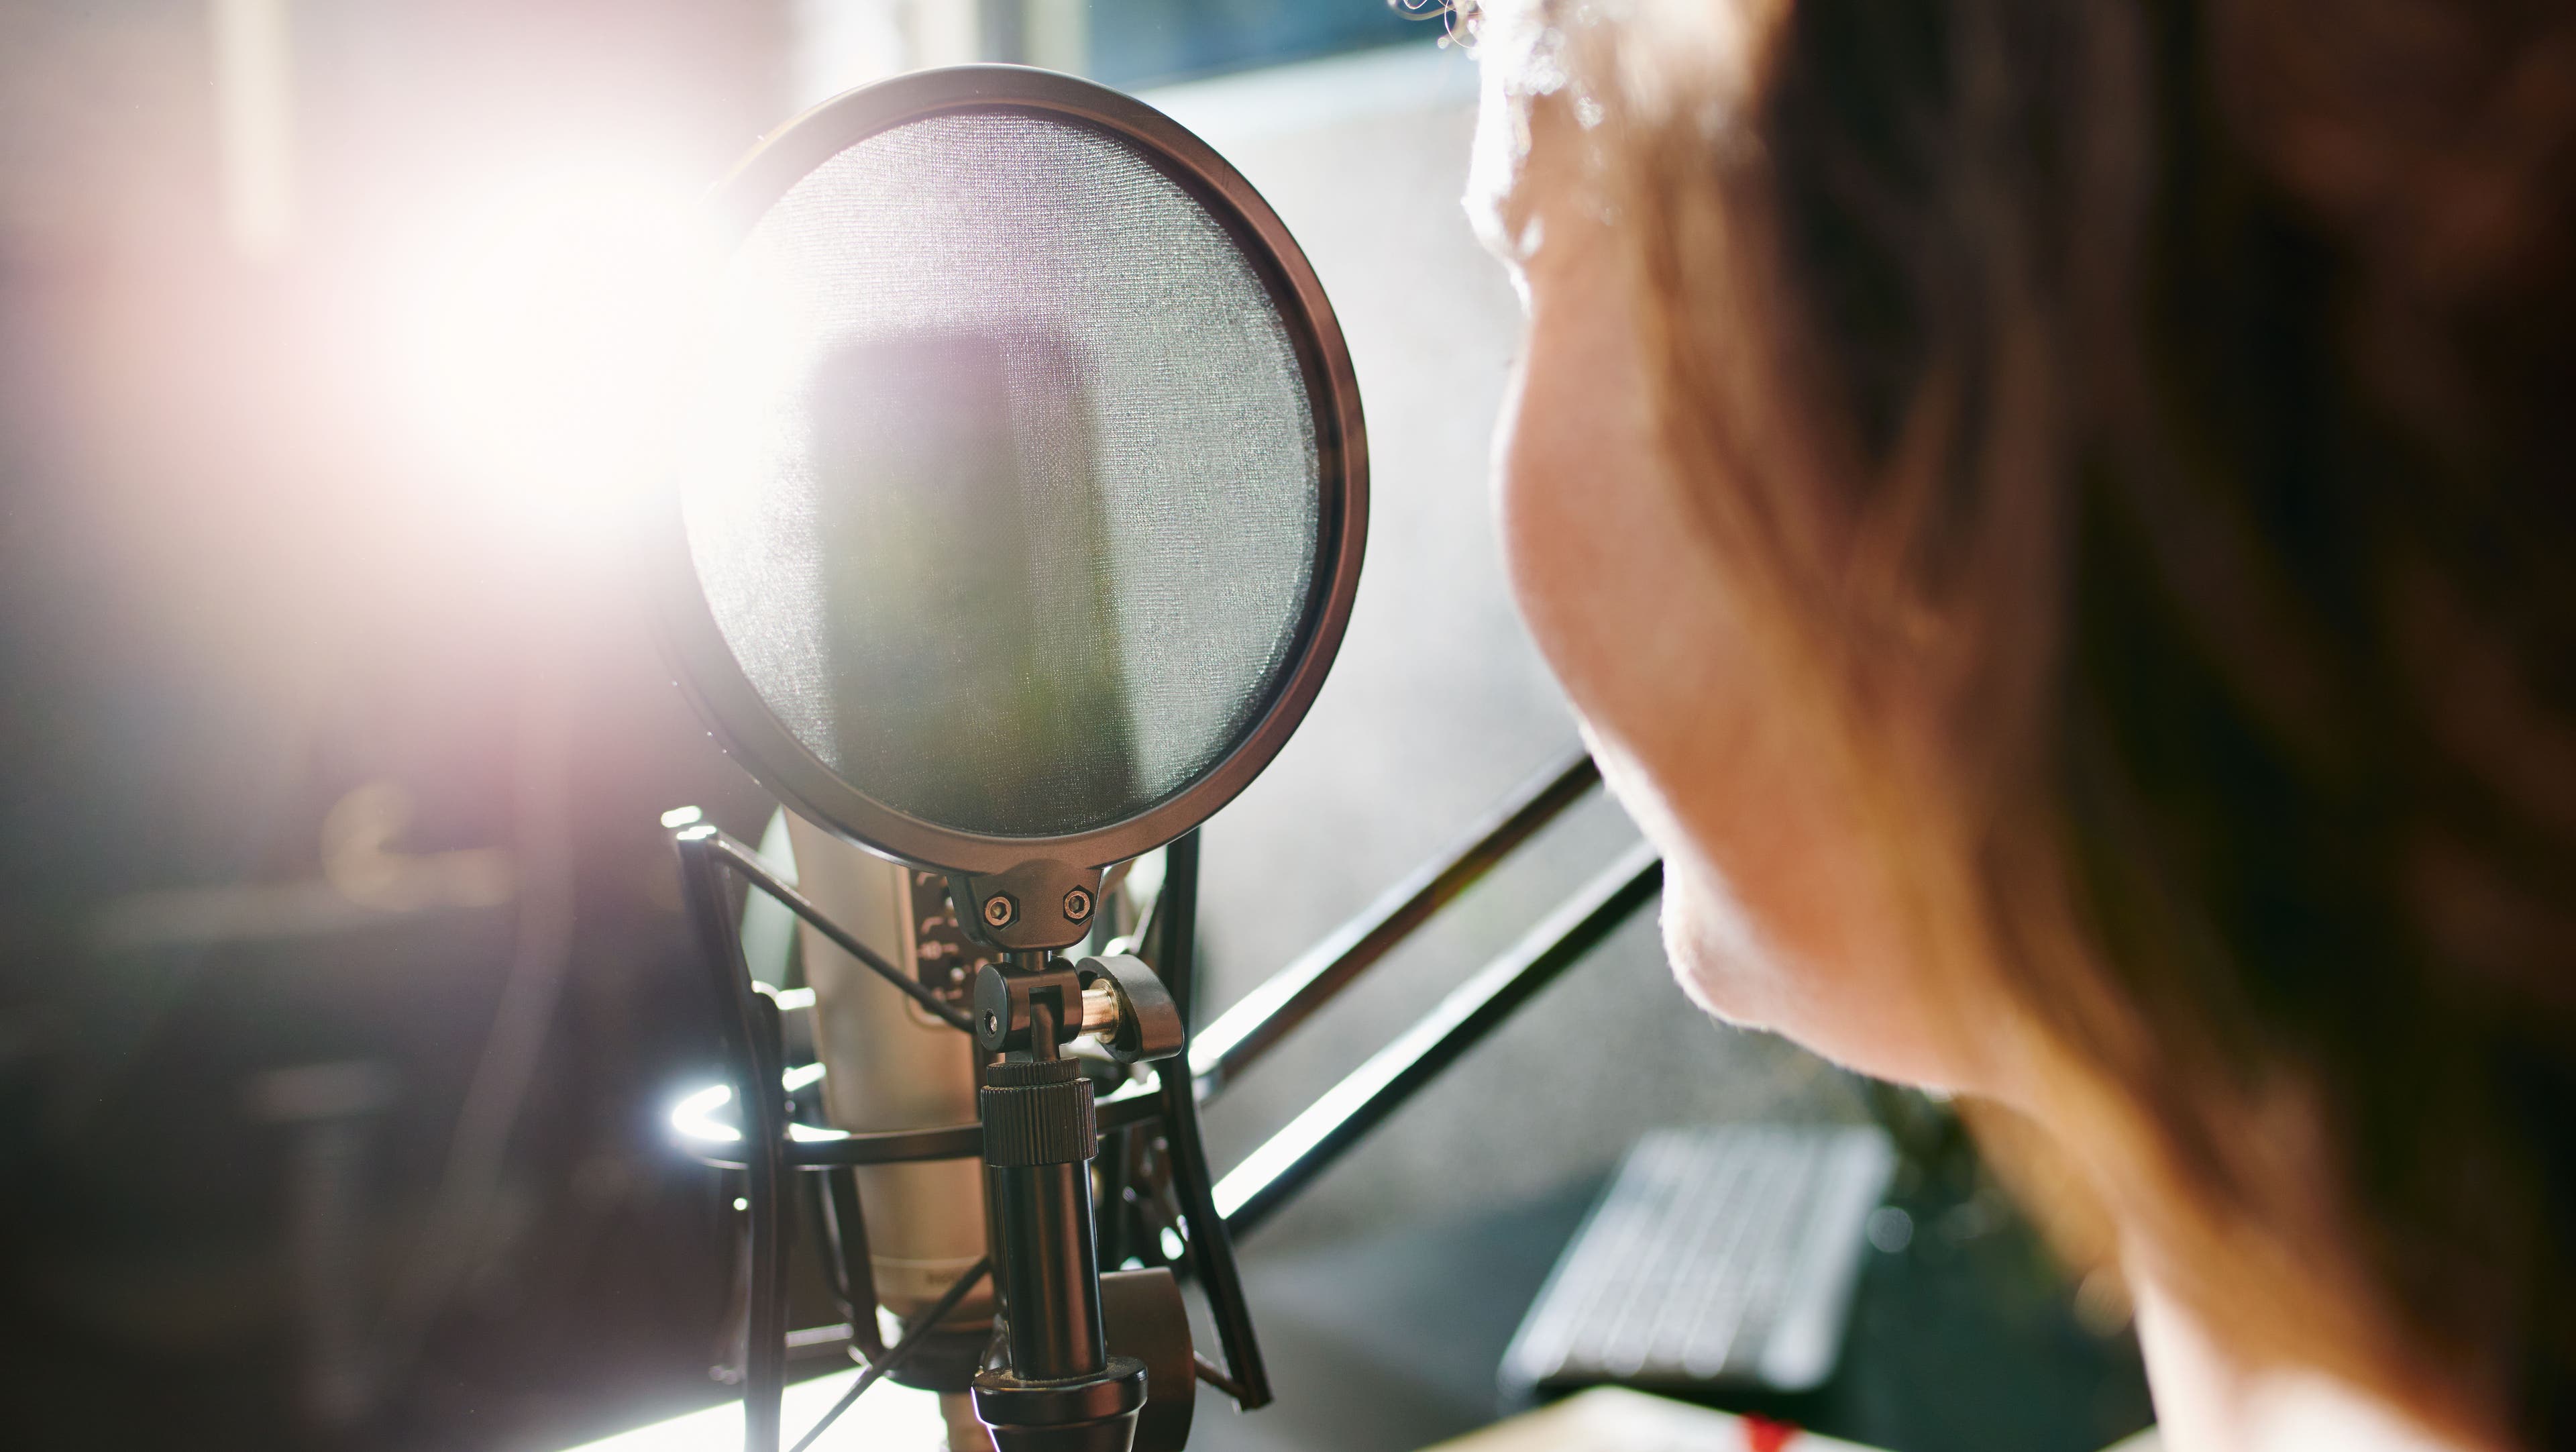 Une animatrice radio plein enregistrement un podcast dans un studio.